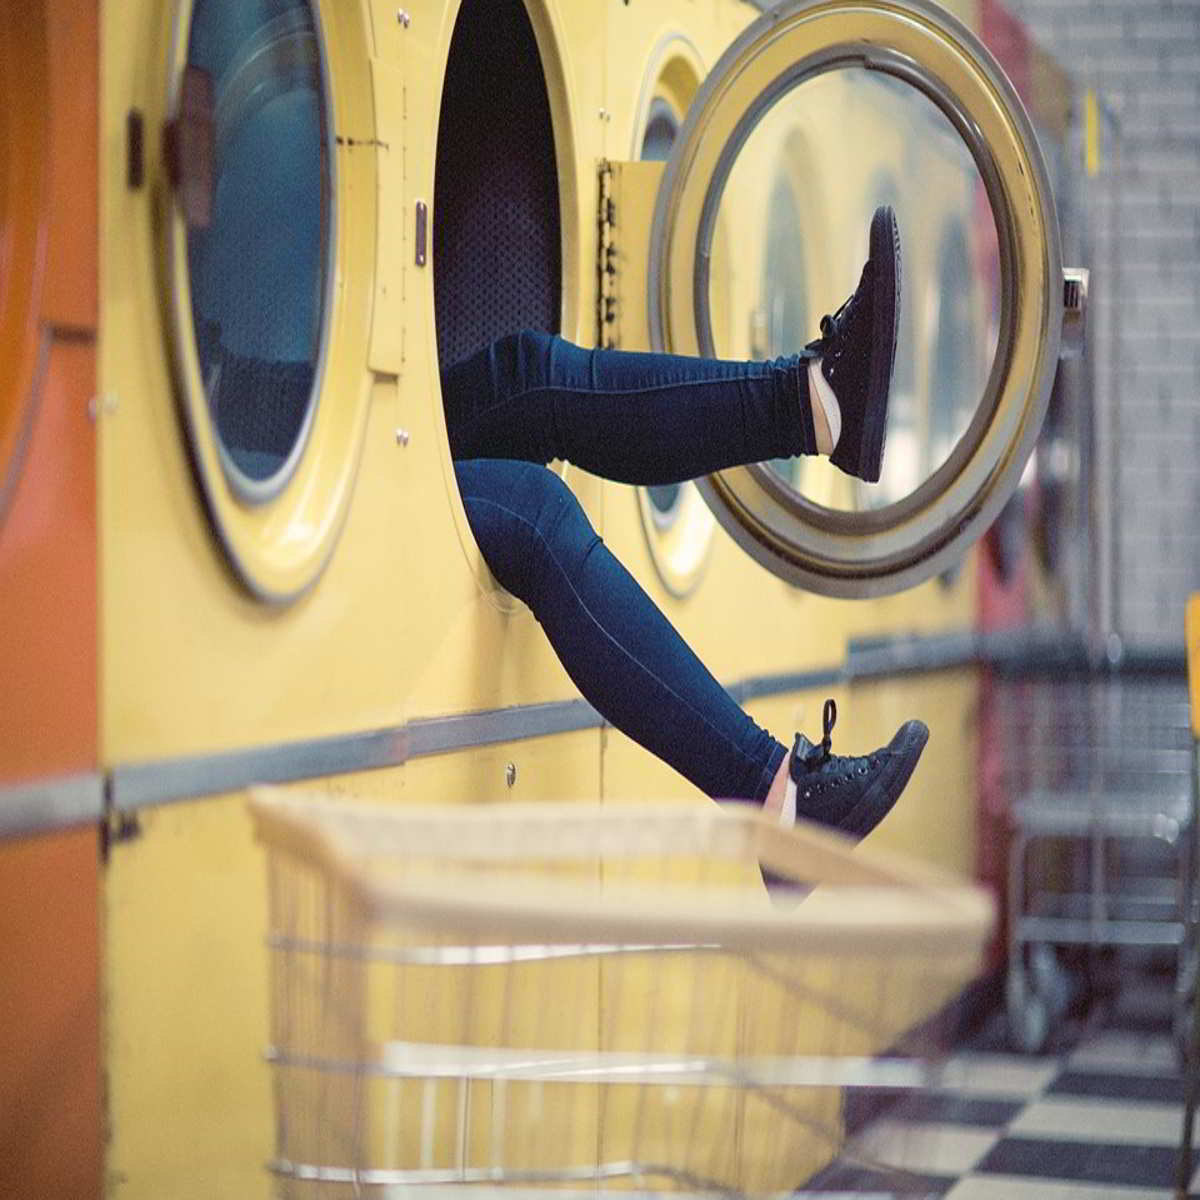 How do you fix a noisy washing machine when spinning